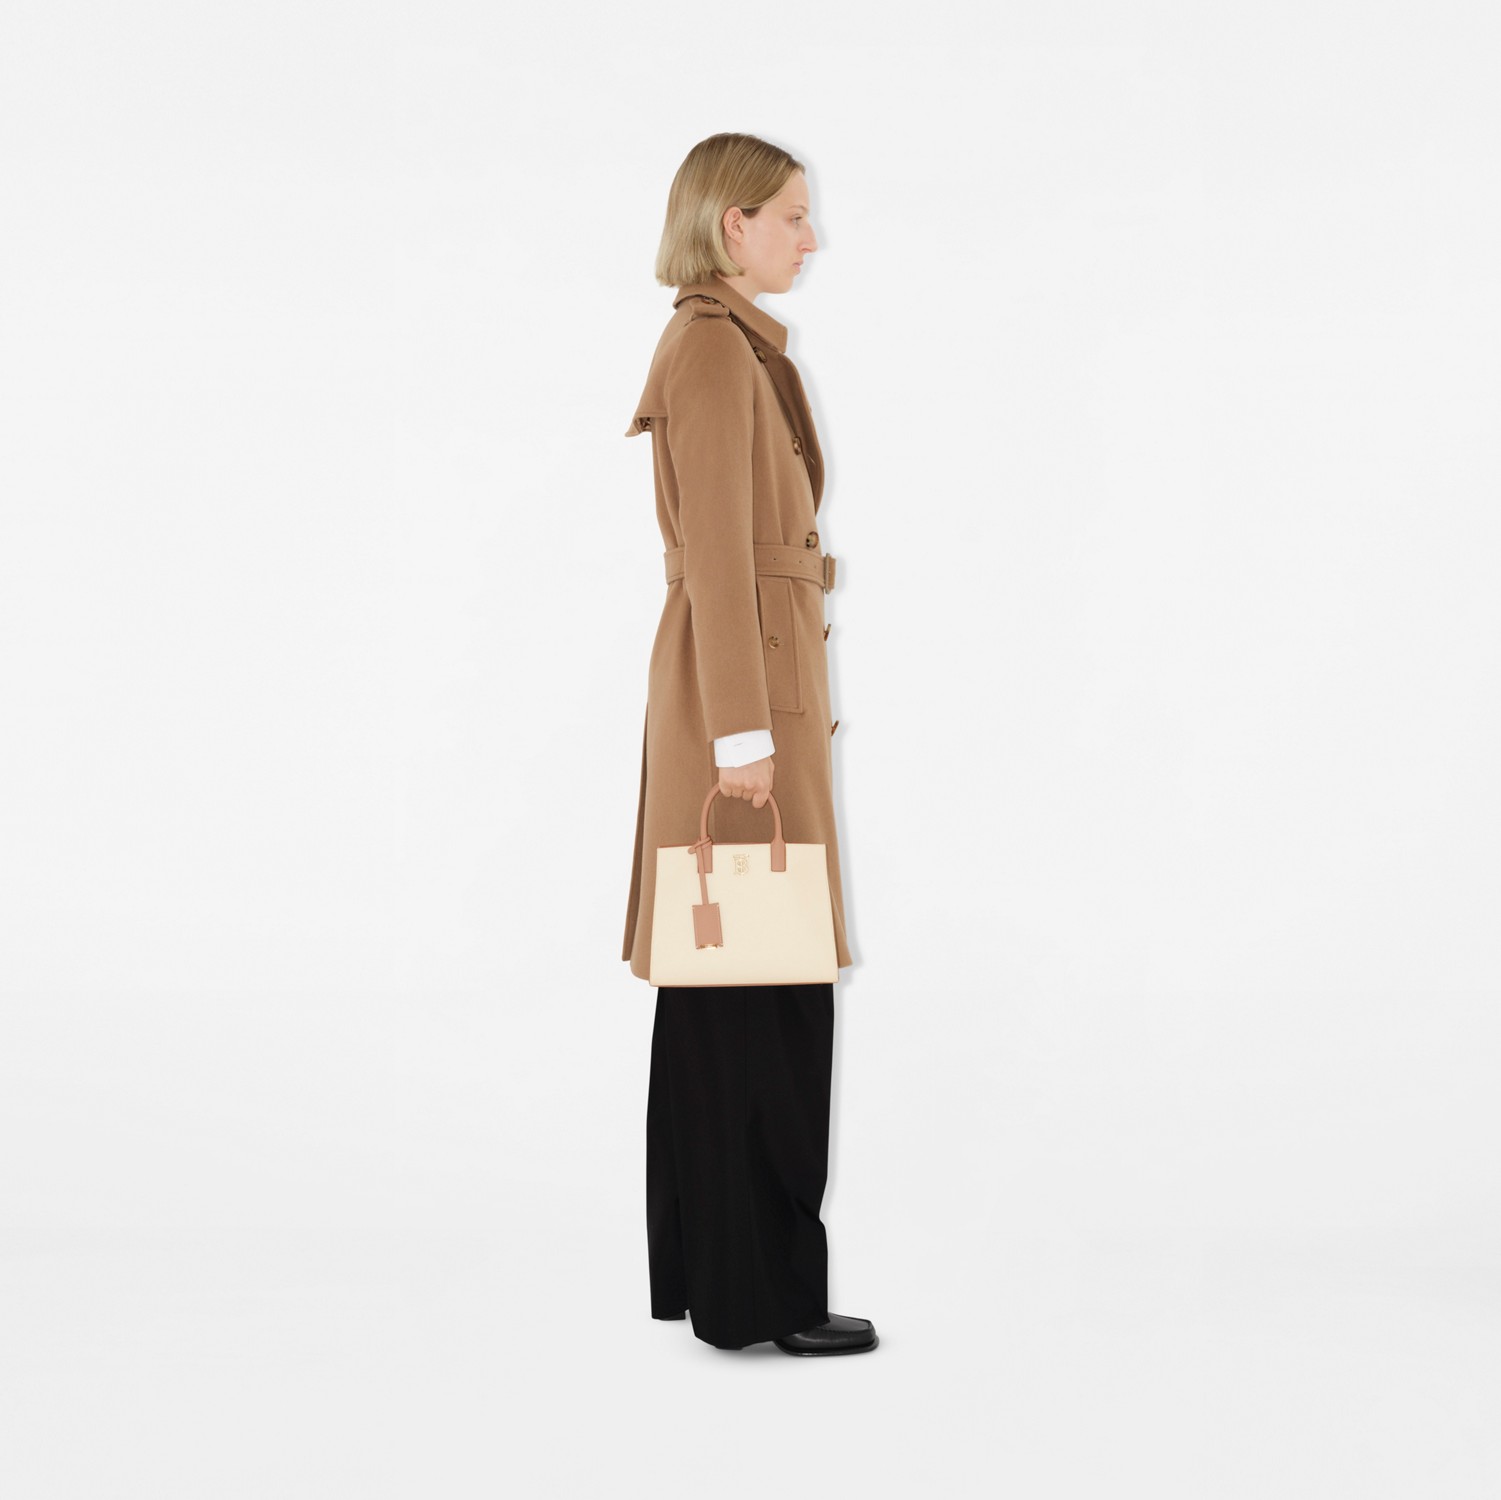 Kensington - Trench coat em mescla de cashmere longo